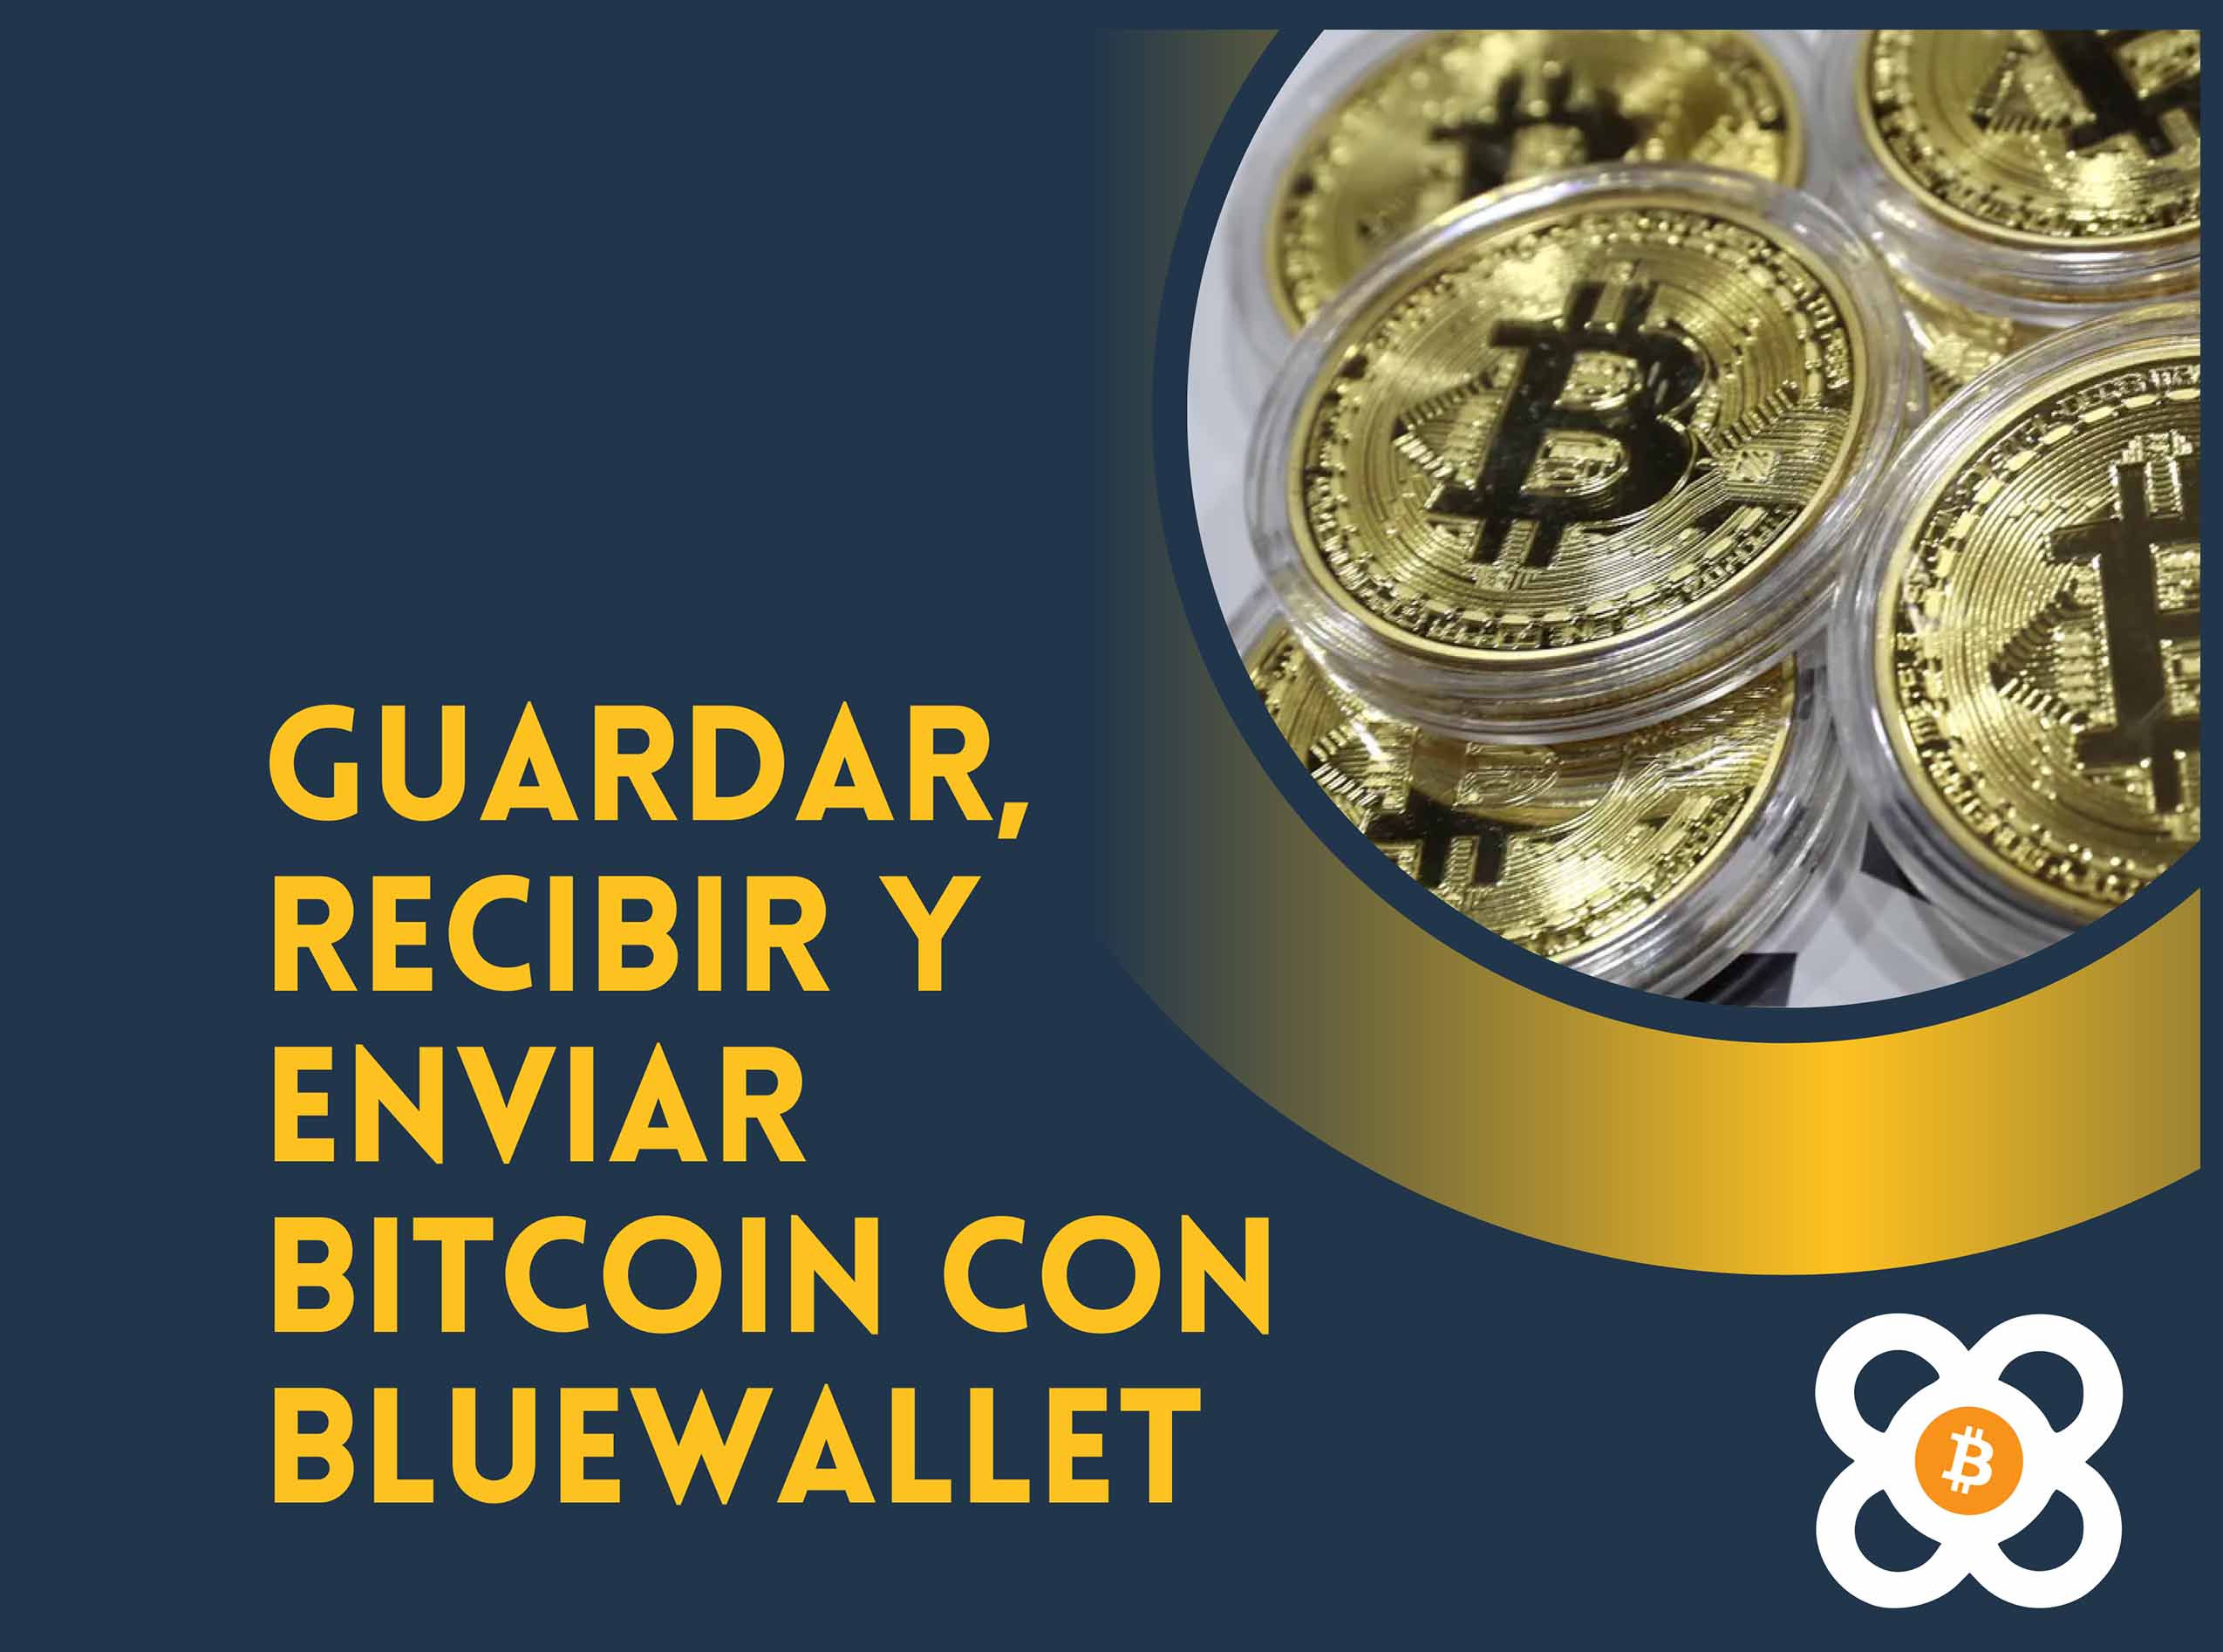 Guardar, recibir y enviar Bitcoin con Bluewallet [taller práctico]